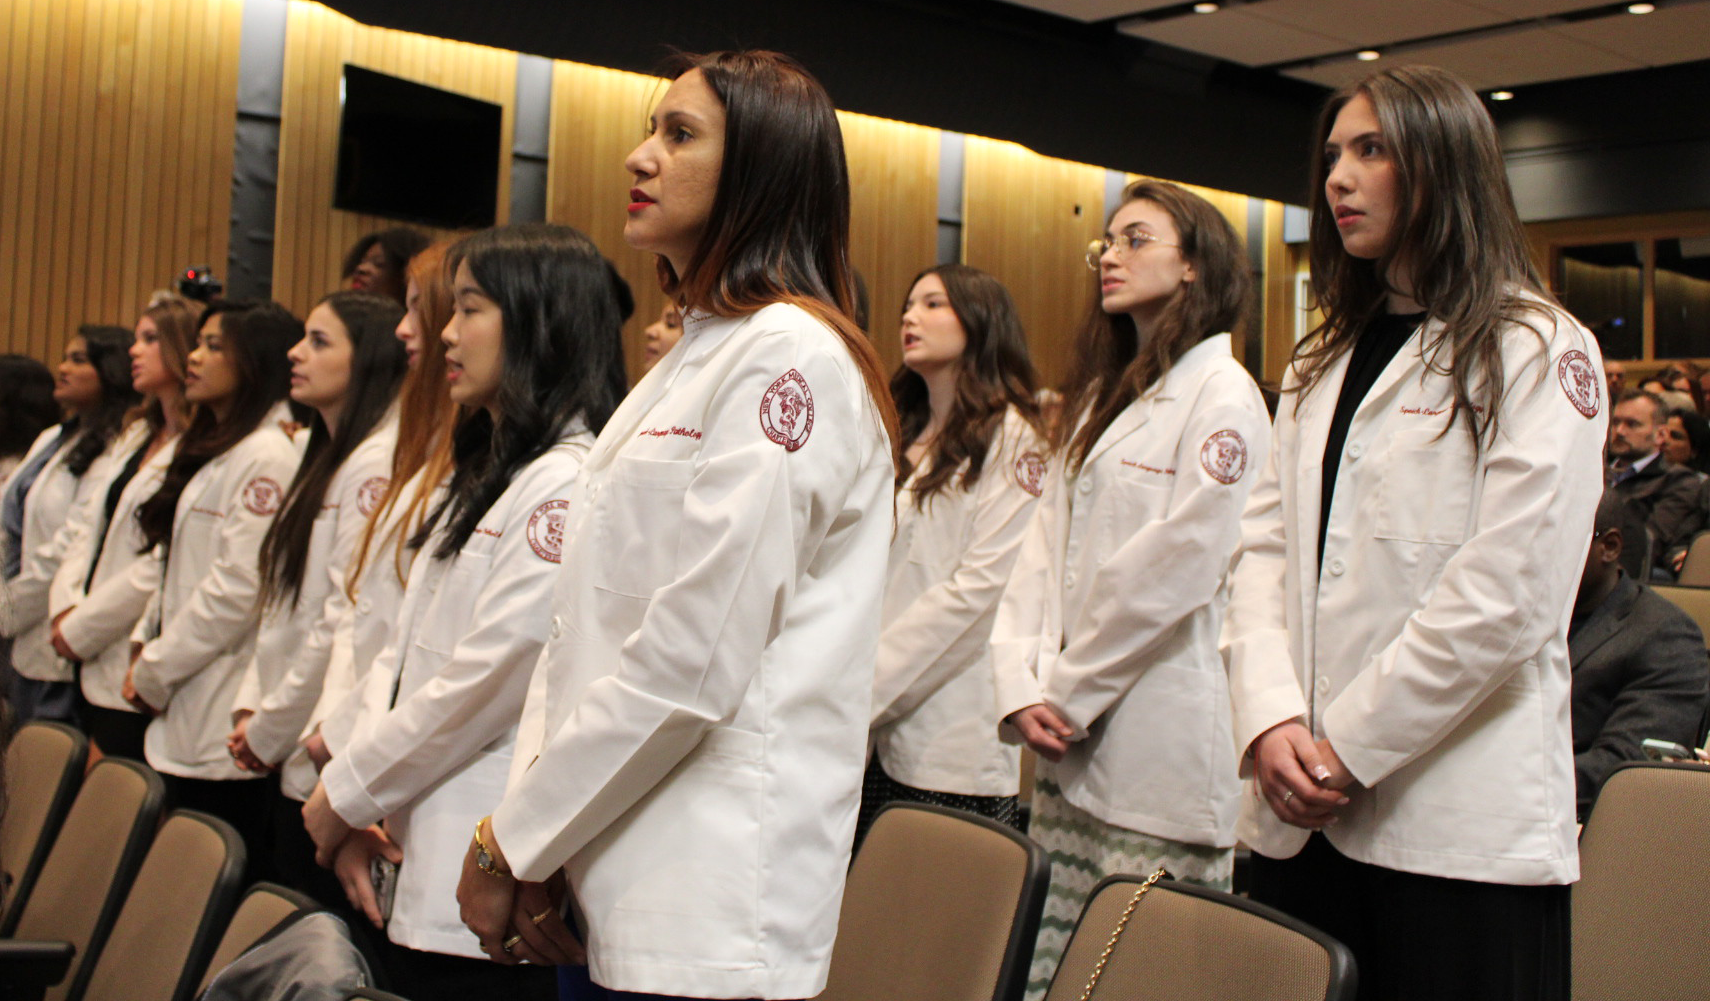 Speech-language pathology students reciting their pledge at the White Coat Ceremony.